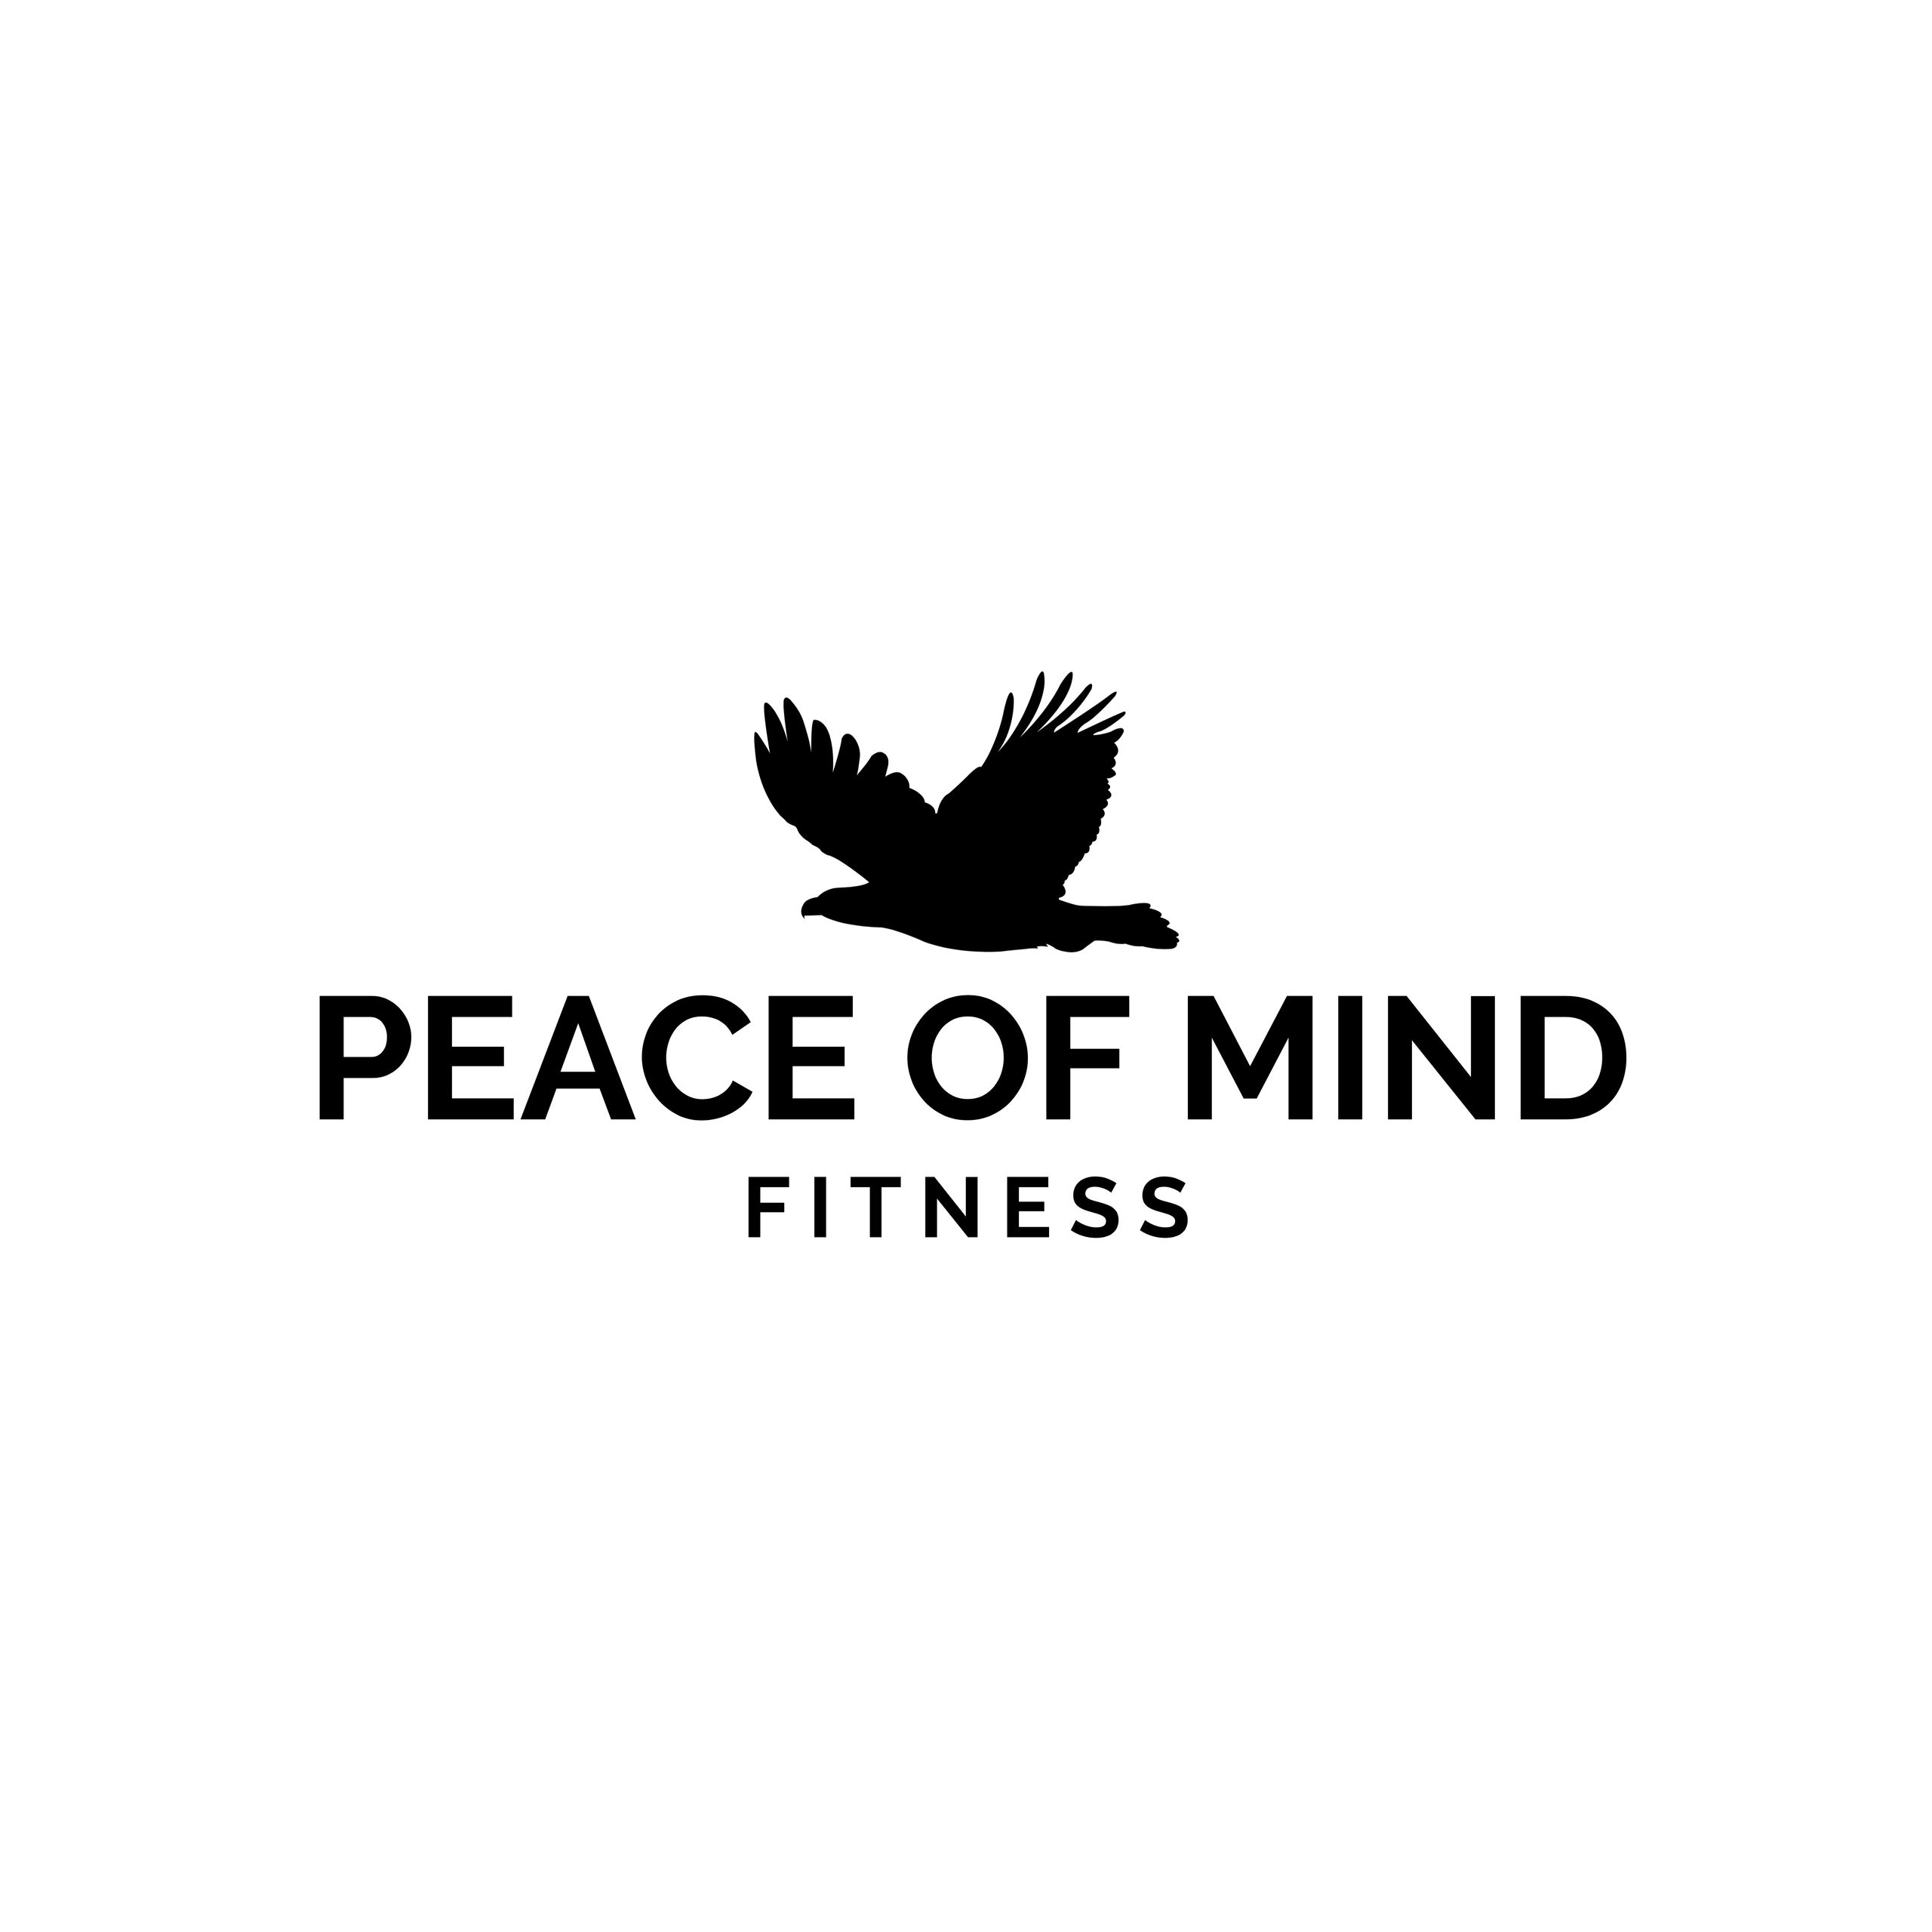 Health & Fitness - Peach of Mind